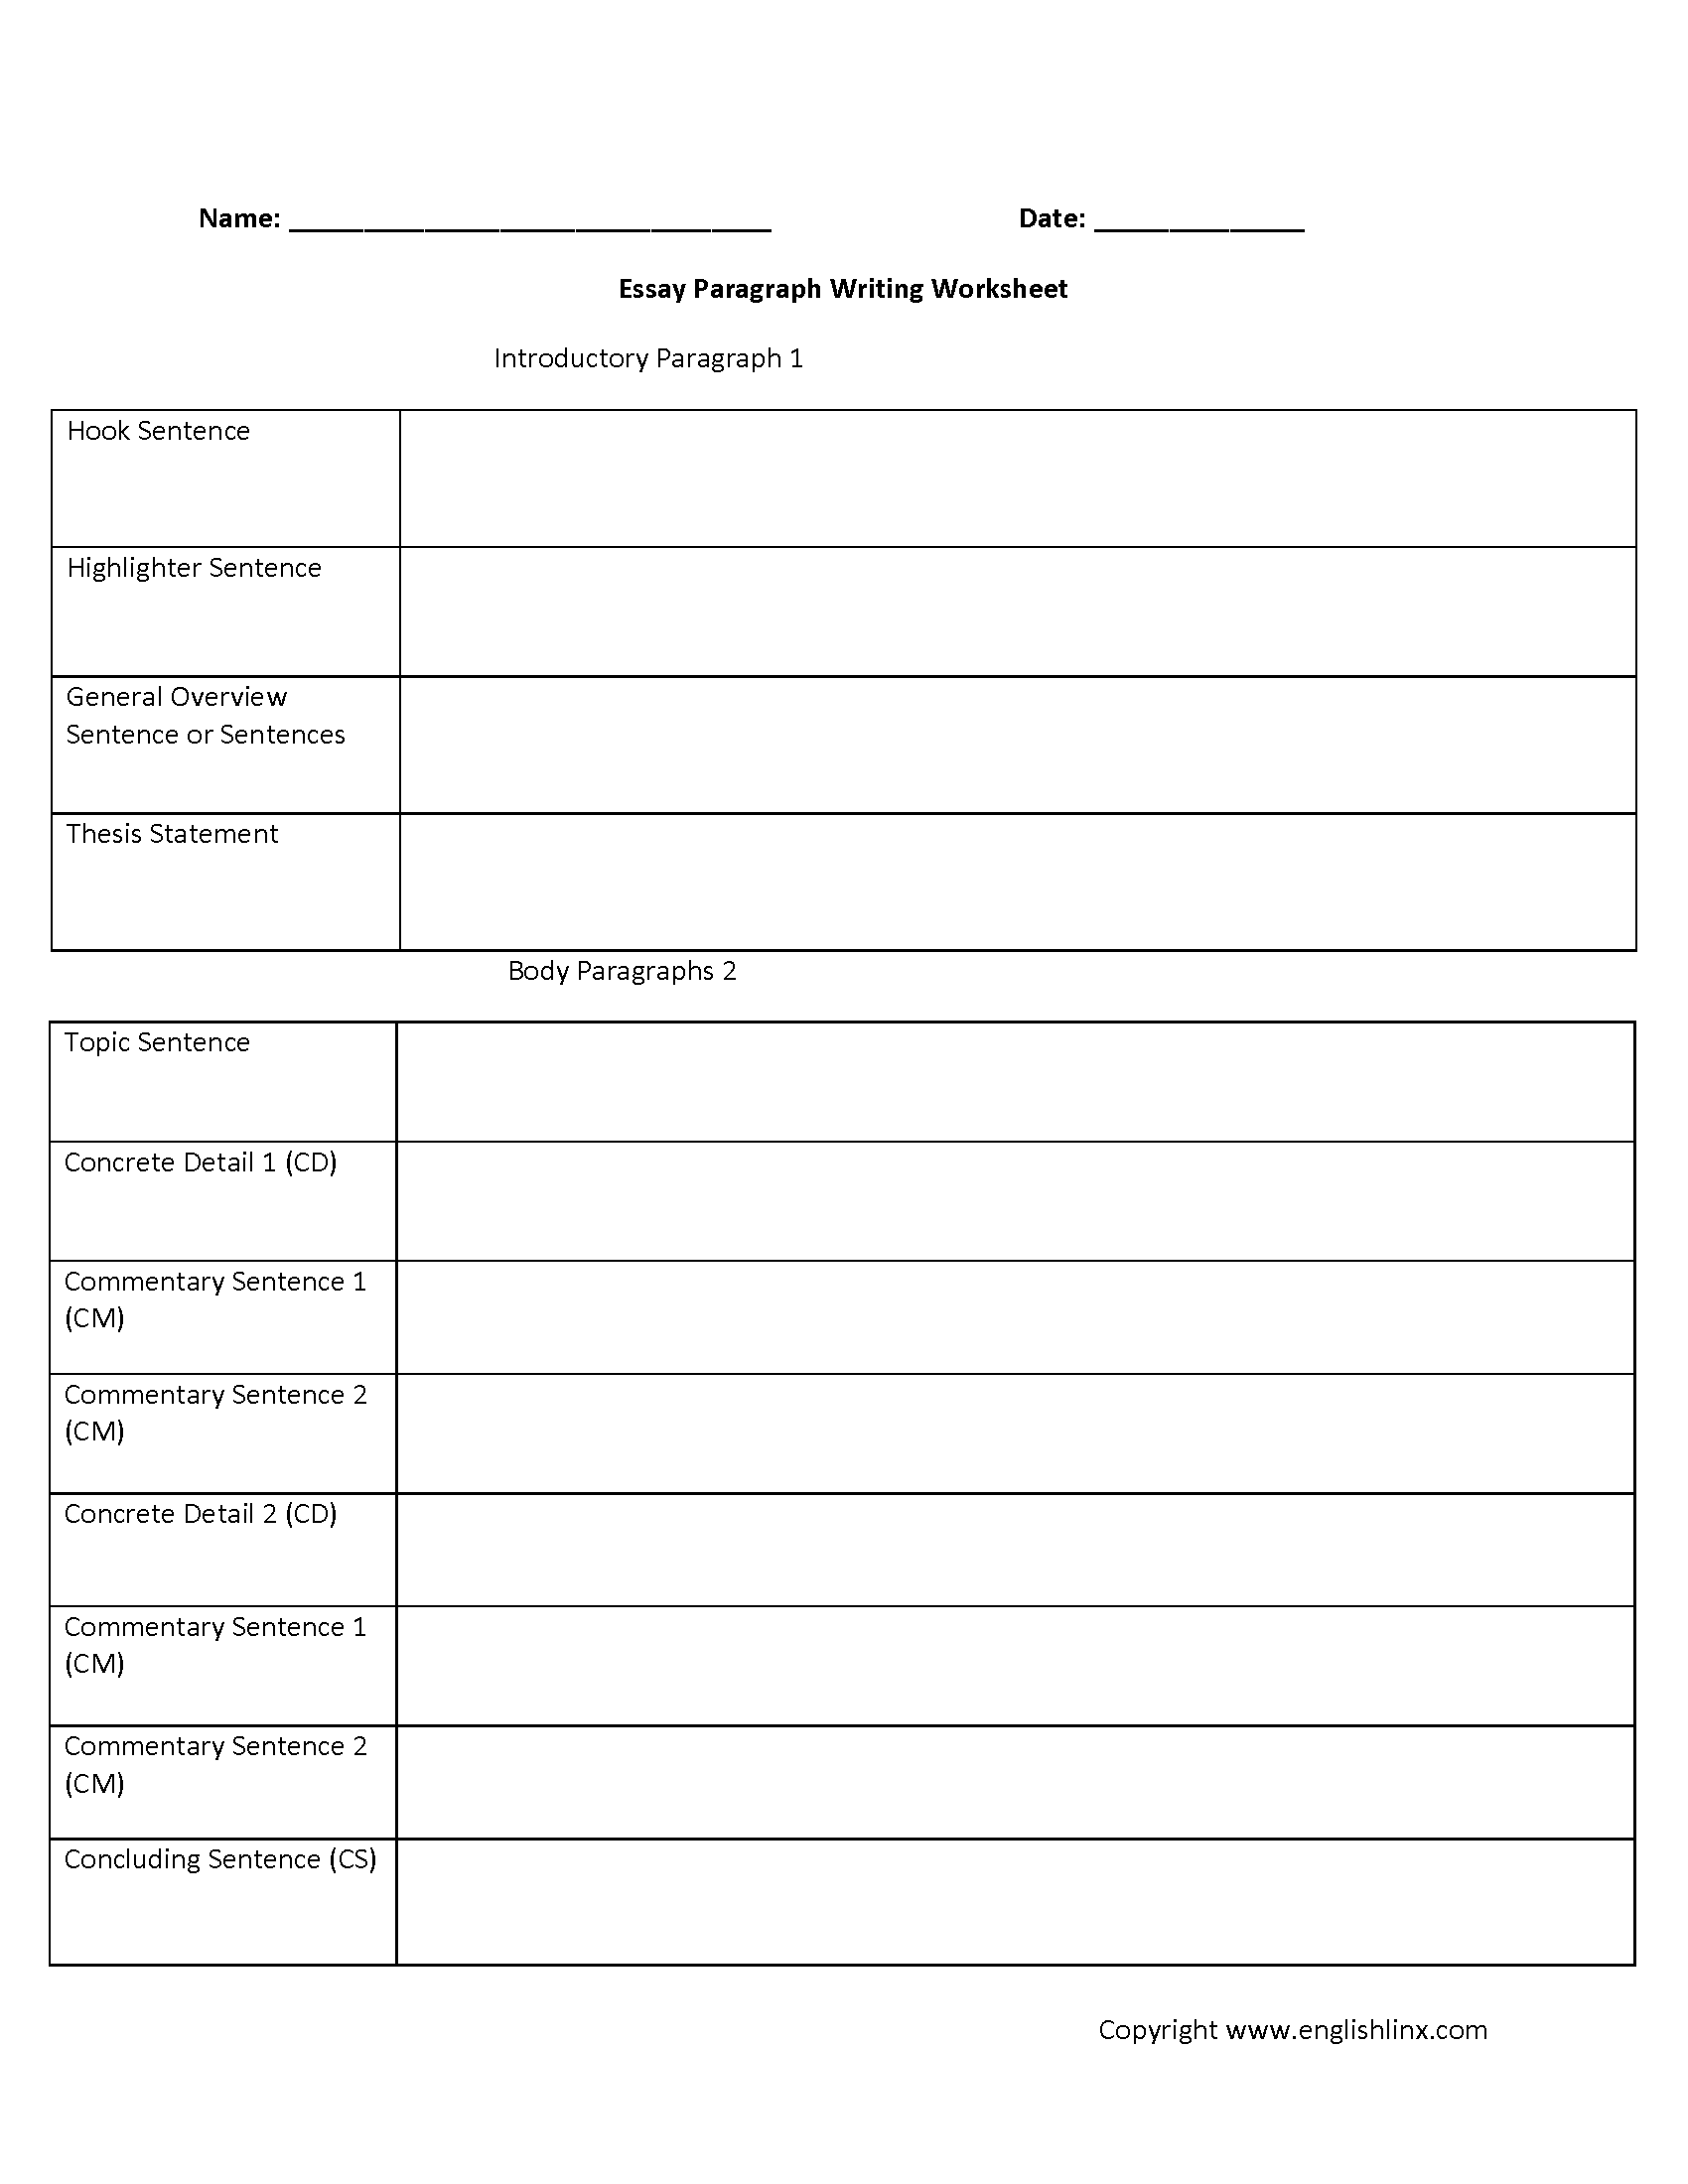 Essay structure worksheet